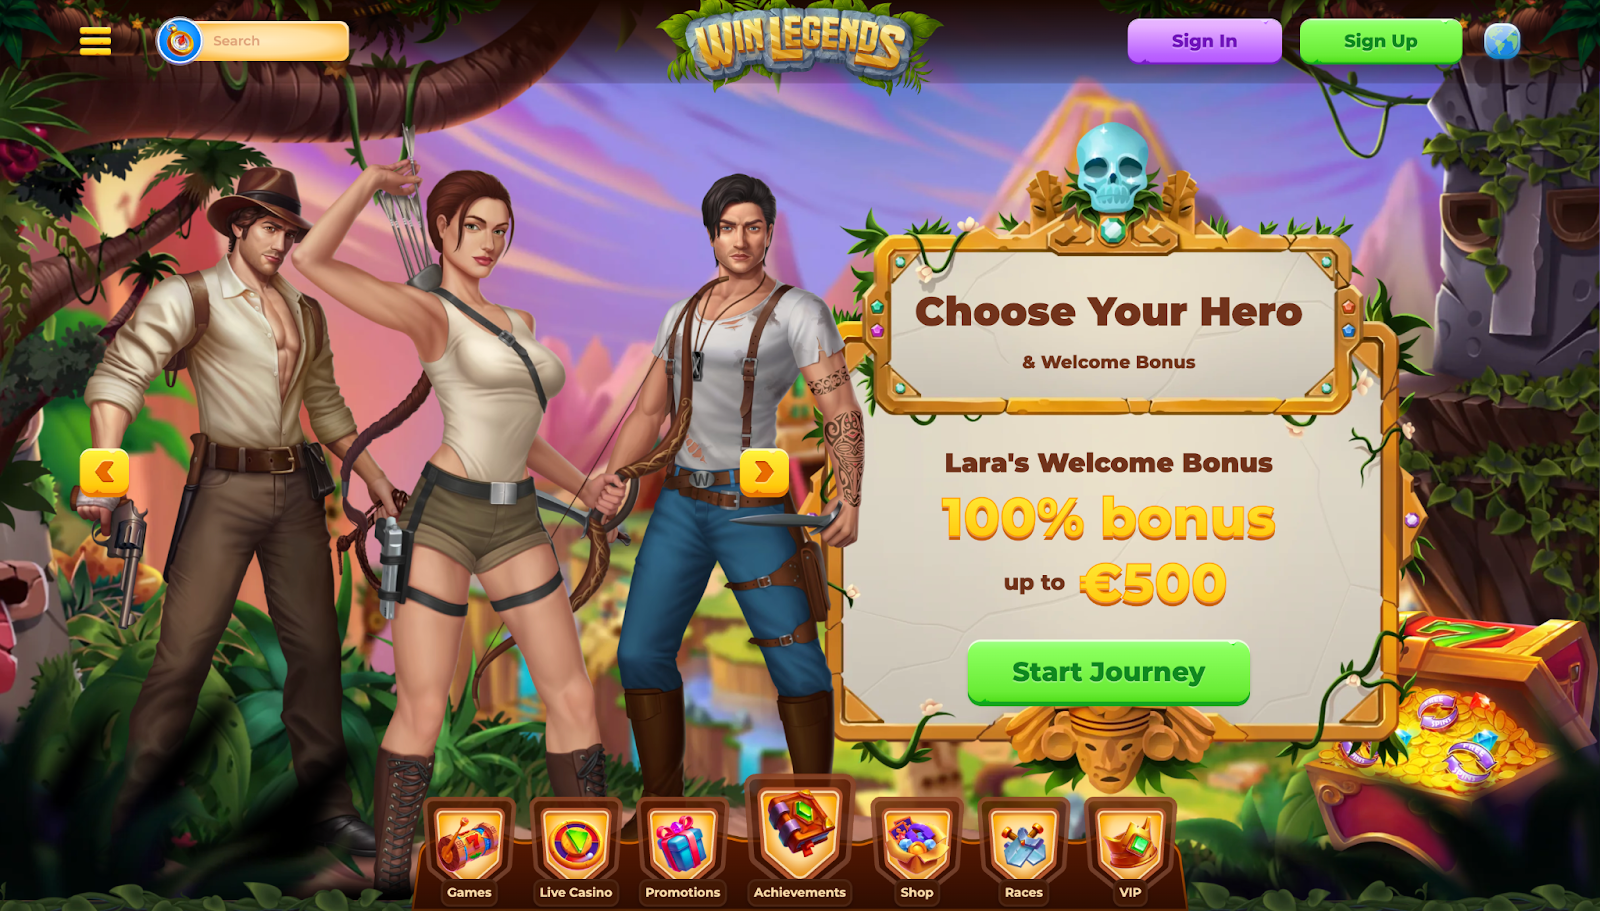 Screenshot of Winlegends casino's landing page